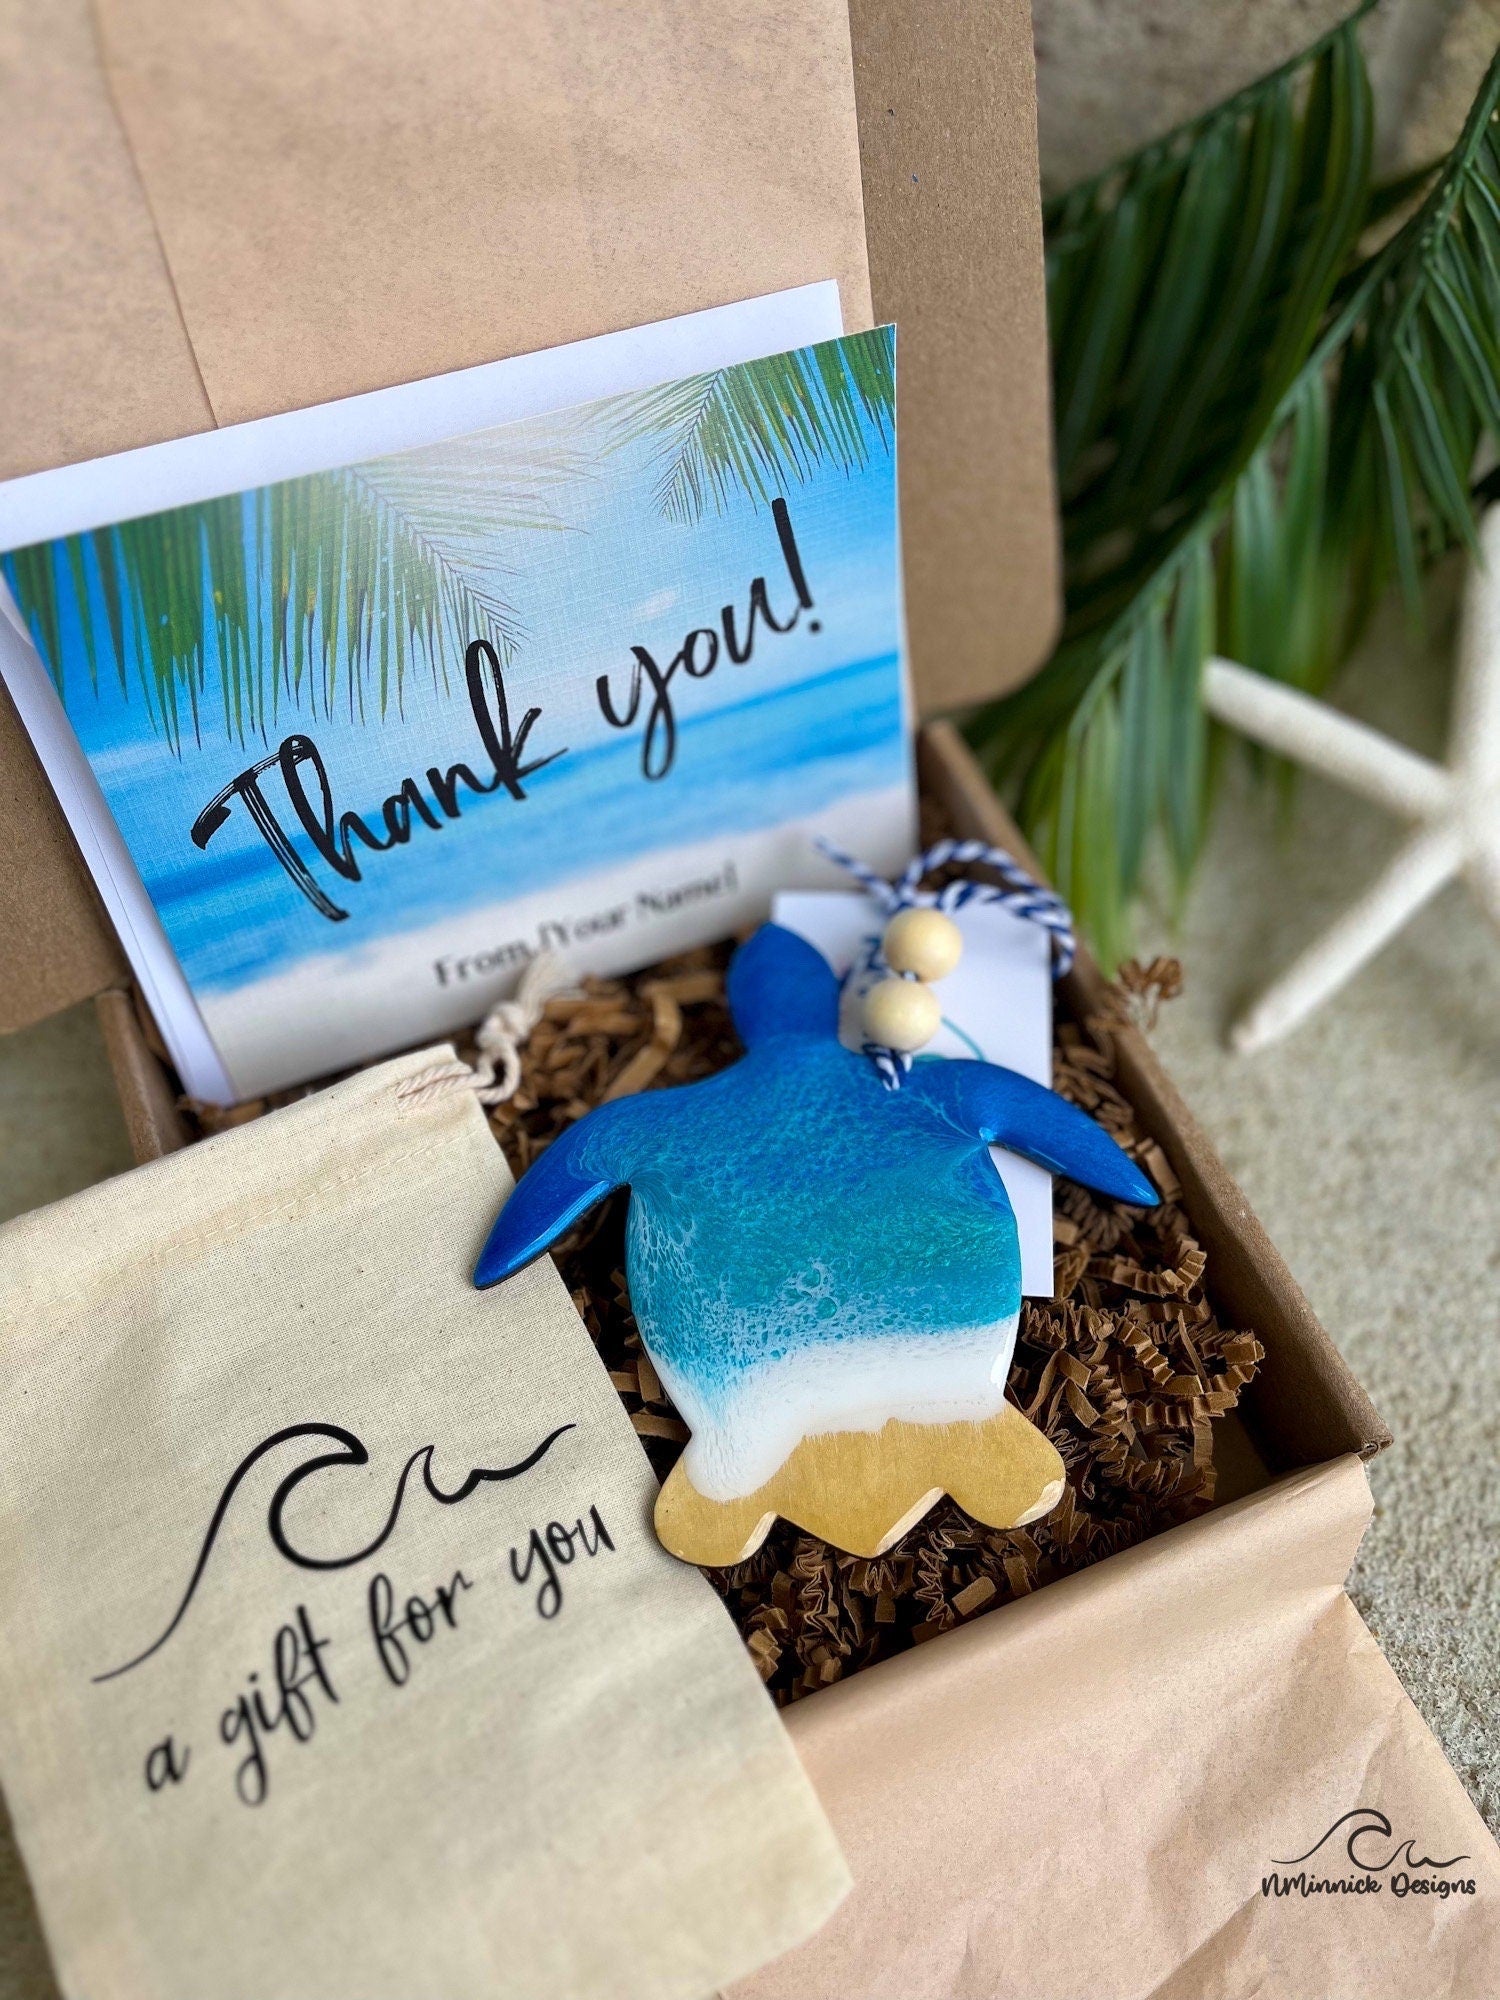 Sea Turtle Ornament Gift Box with Keepsake Gift Bag and Custom Card